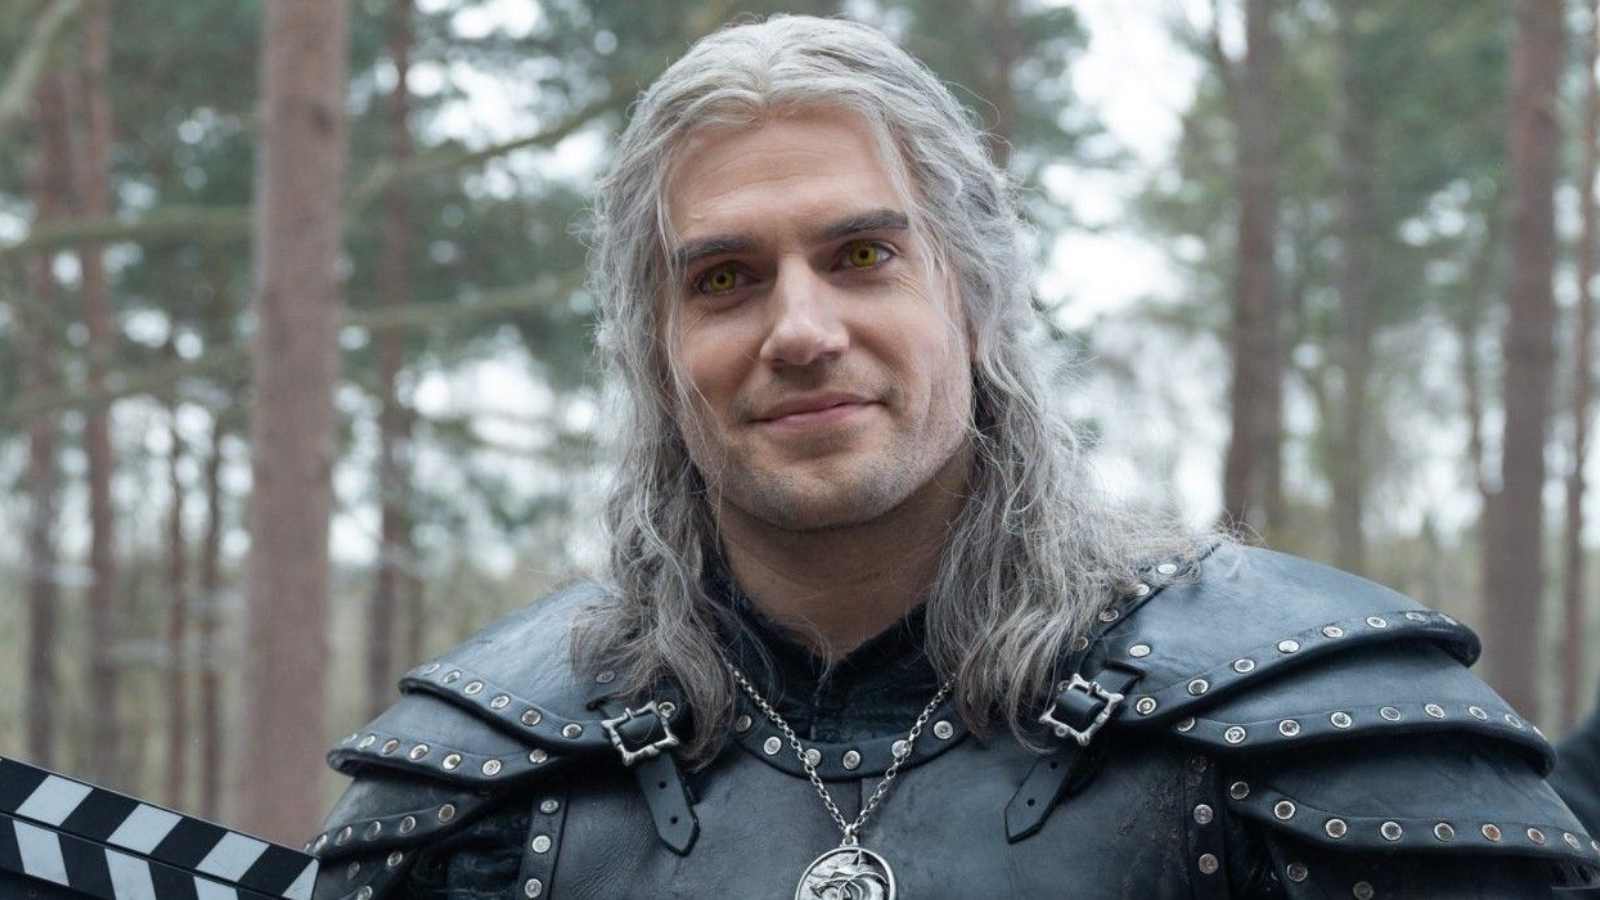 The Geralt of Rivia